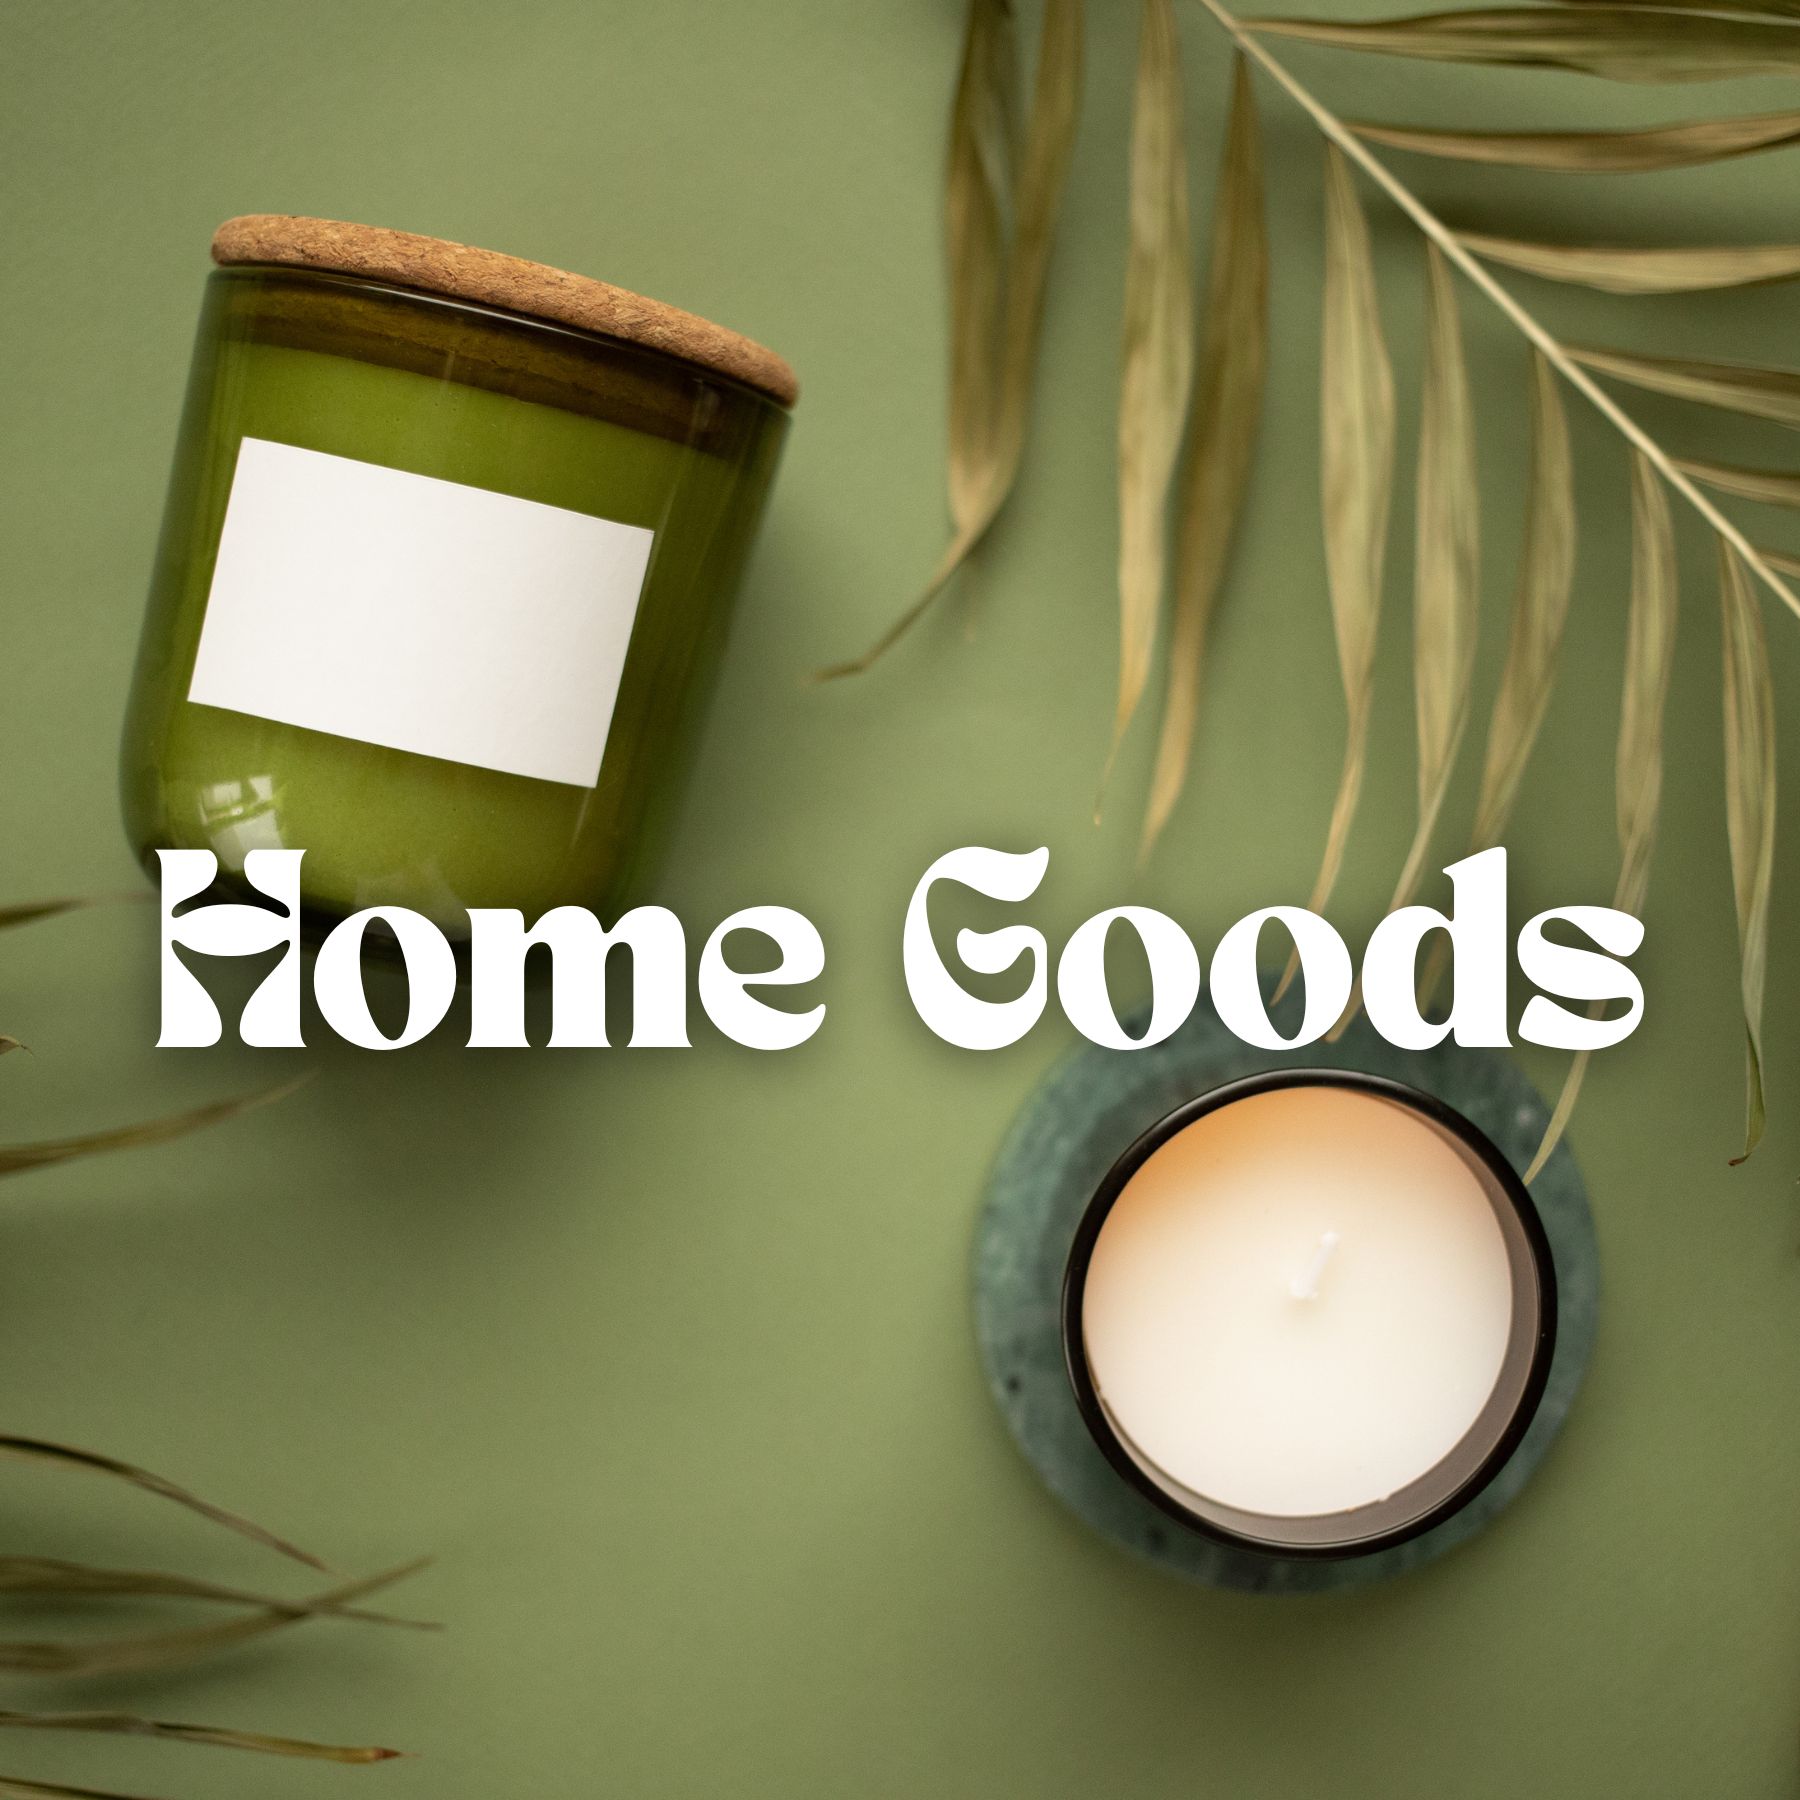 Decorative Image Says "Home Goods"